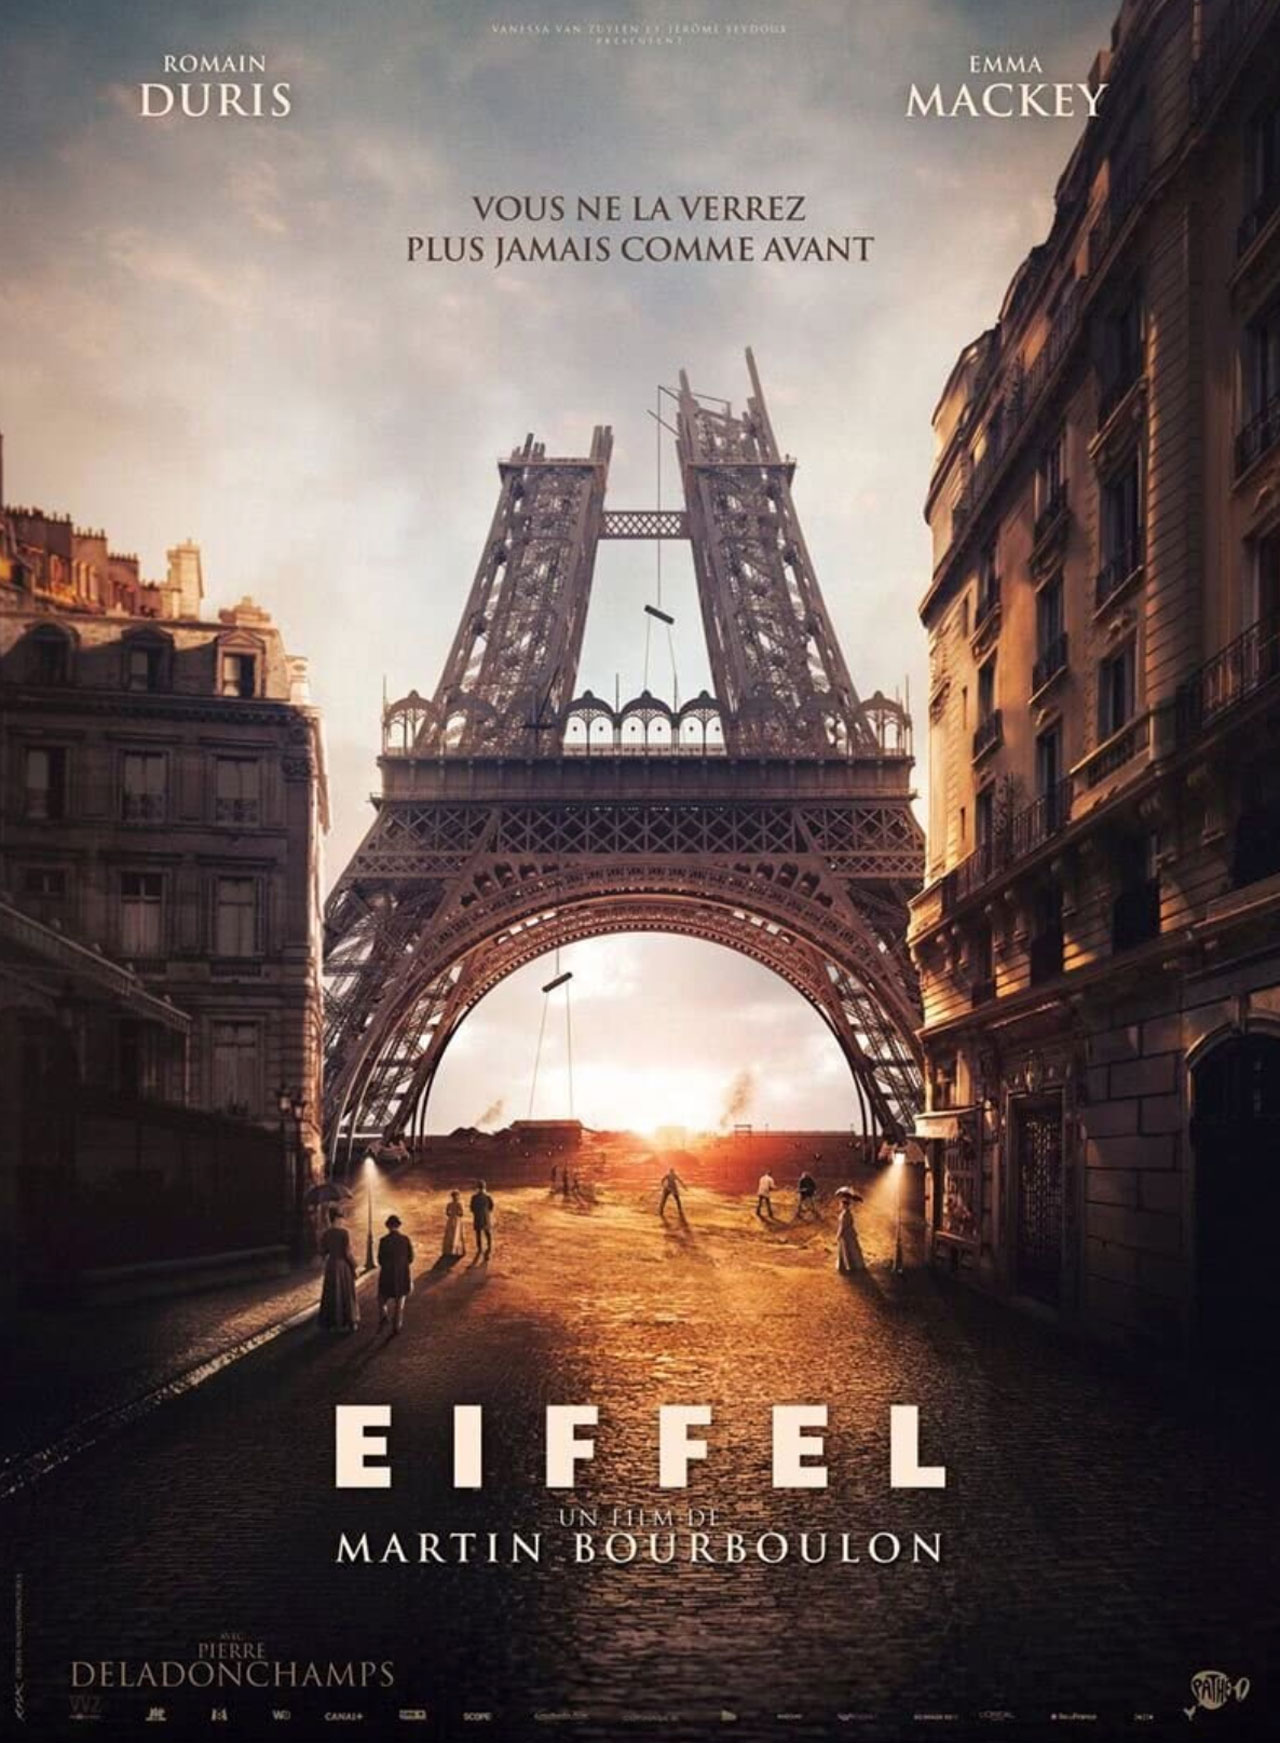 Eiffel_poster